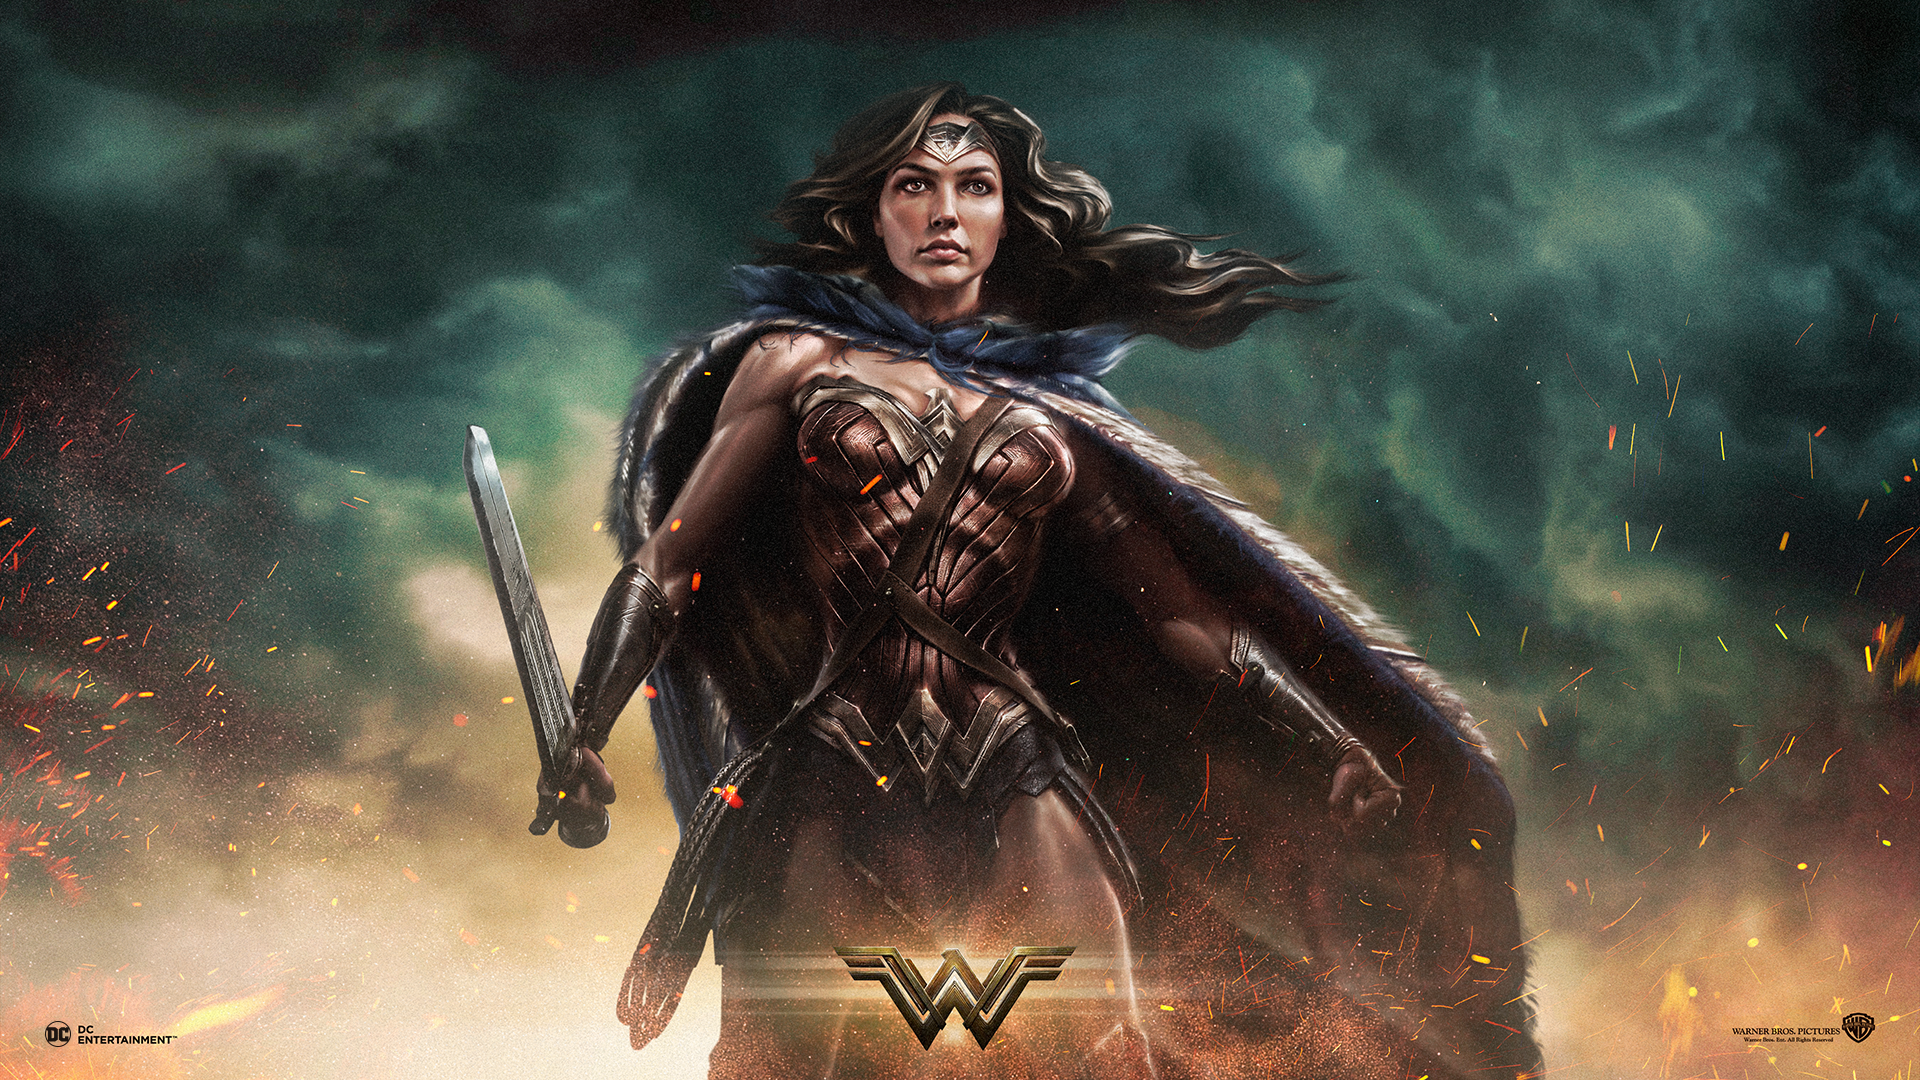 16+] Wonder Woman Movie Desktop Wallpapers - WallpaperSafari